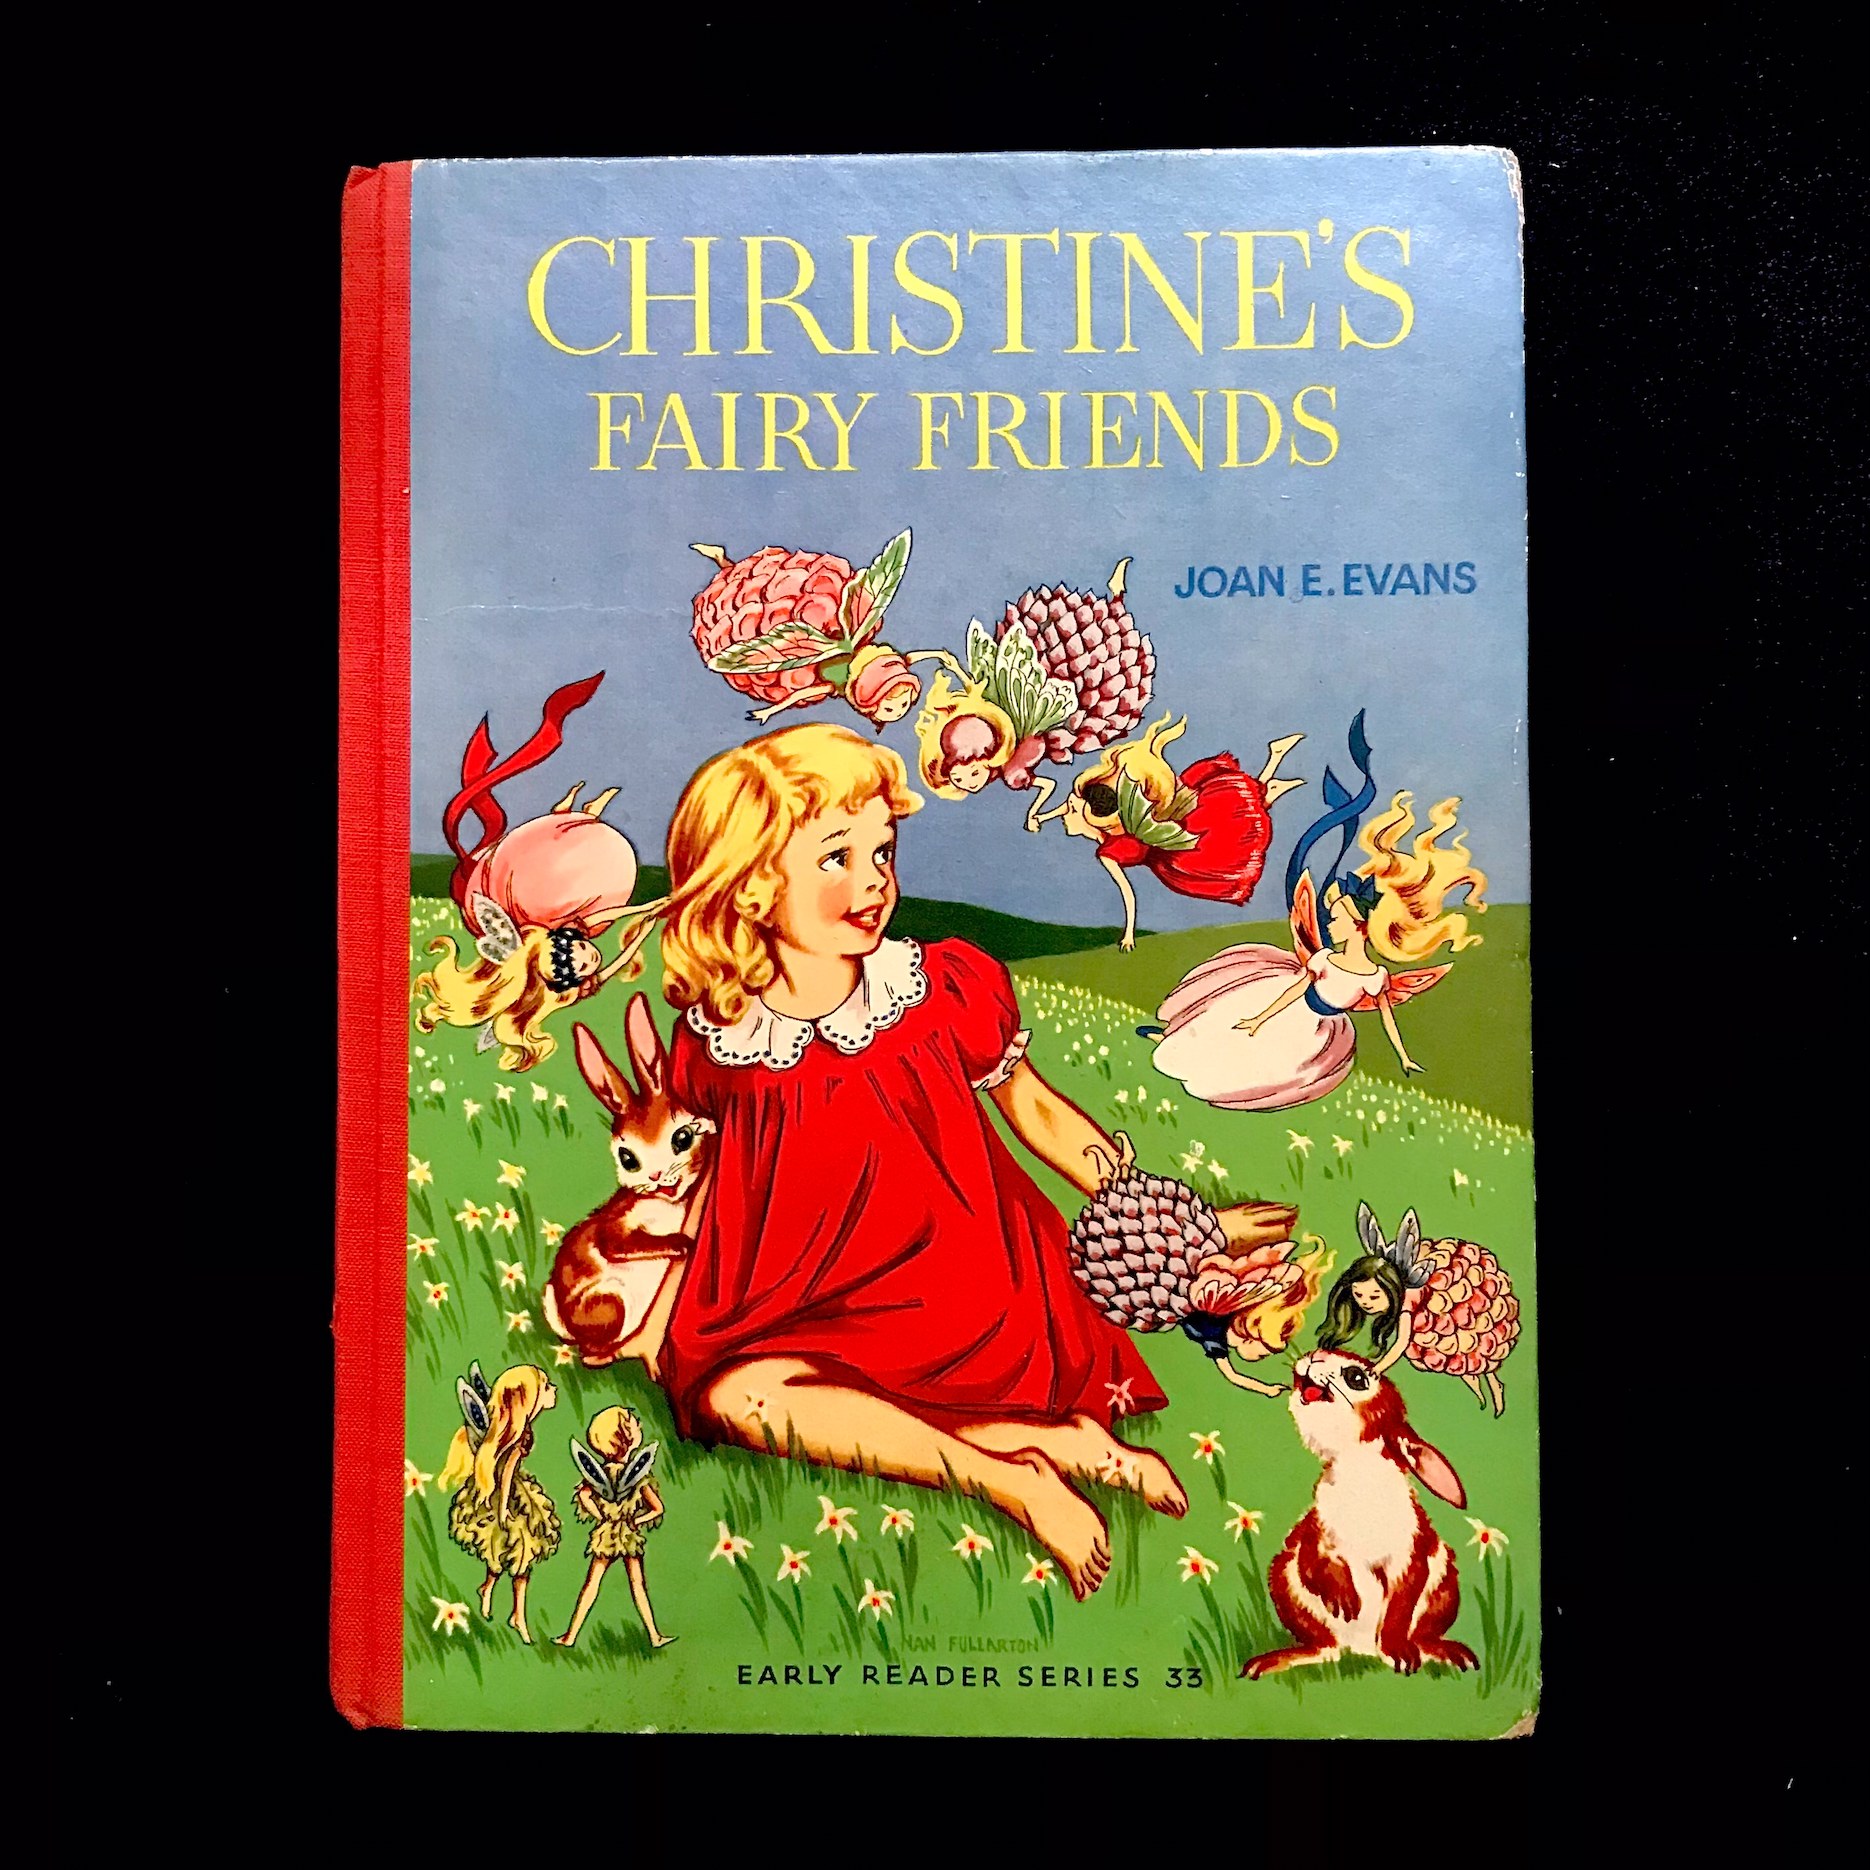 Christine's Fairy Friends by Joan E. Evans